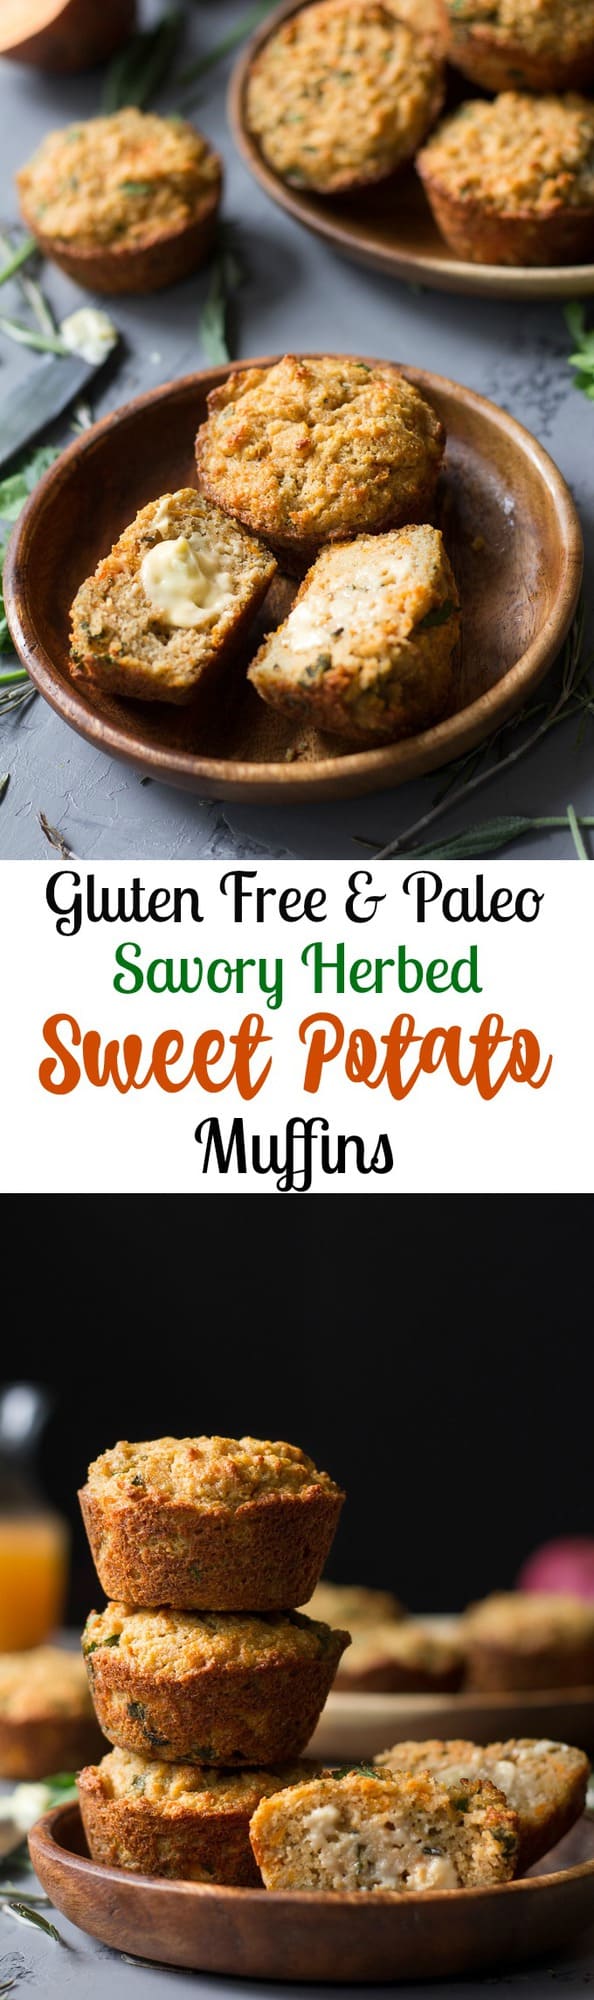 paleo-savory-herbed-sweet-potato-muffins